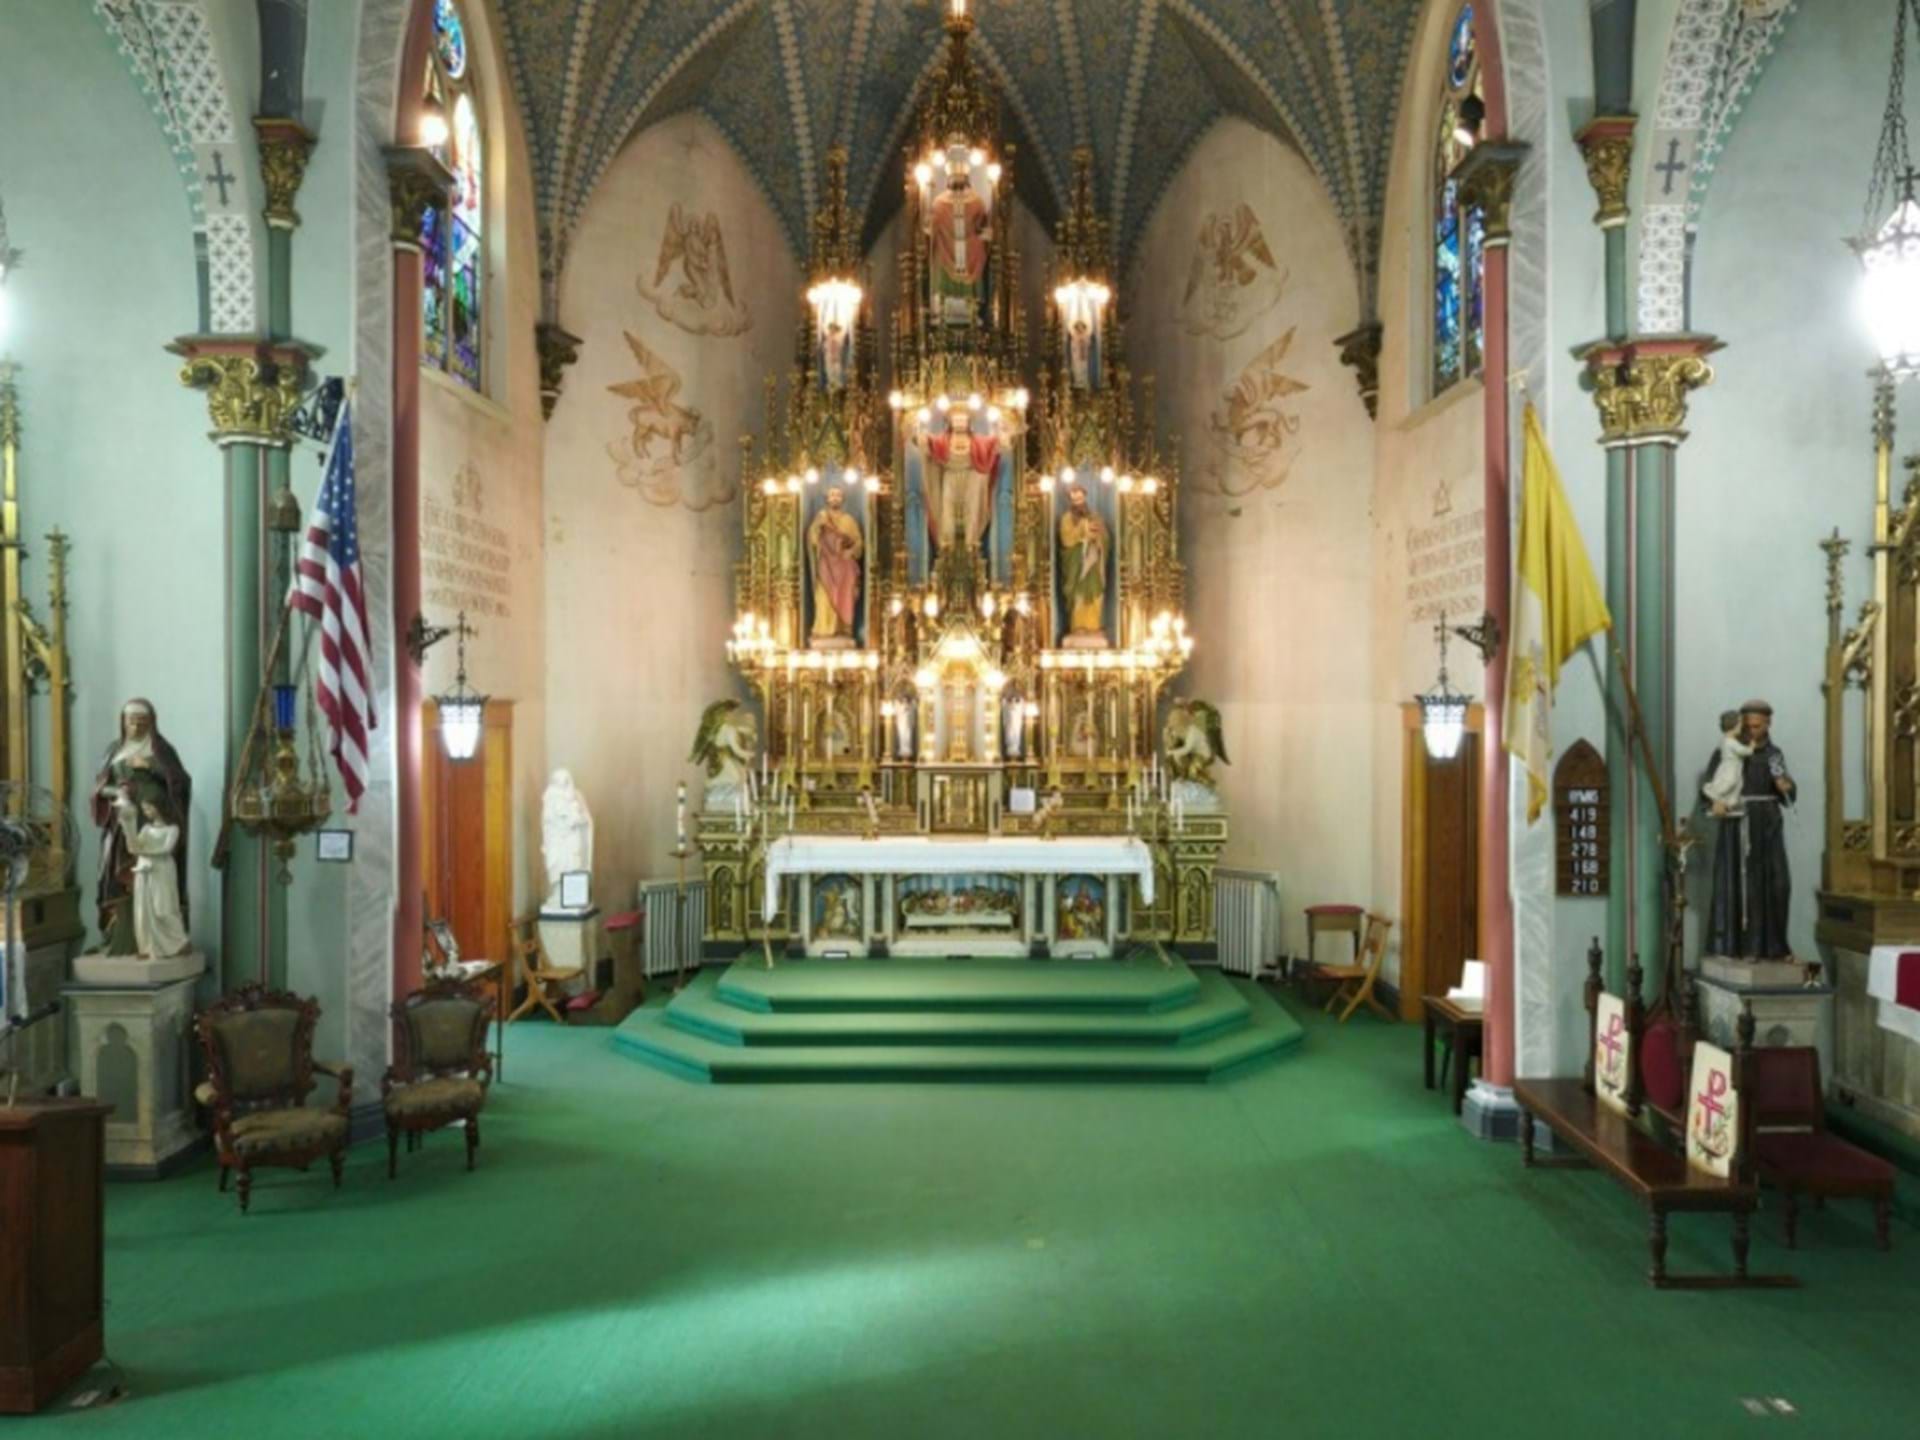 Main altar - fully lit